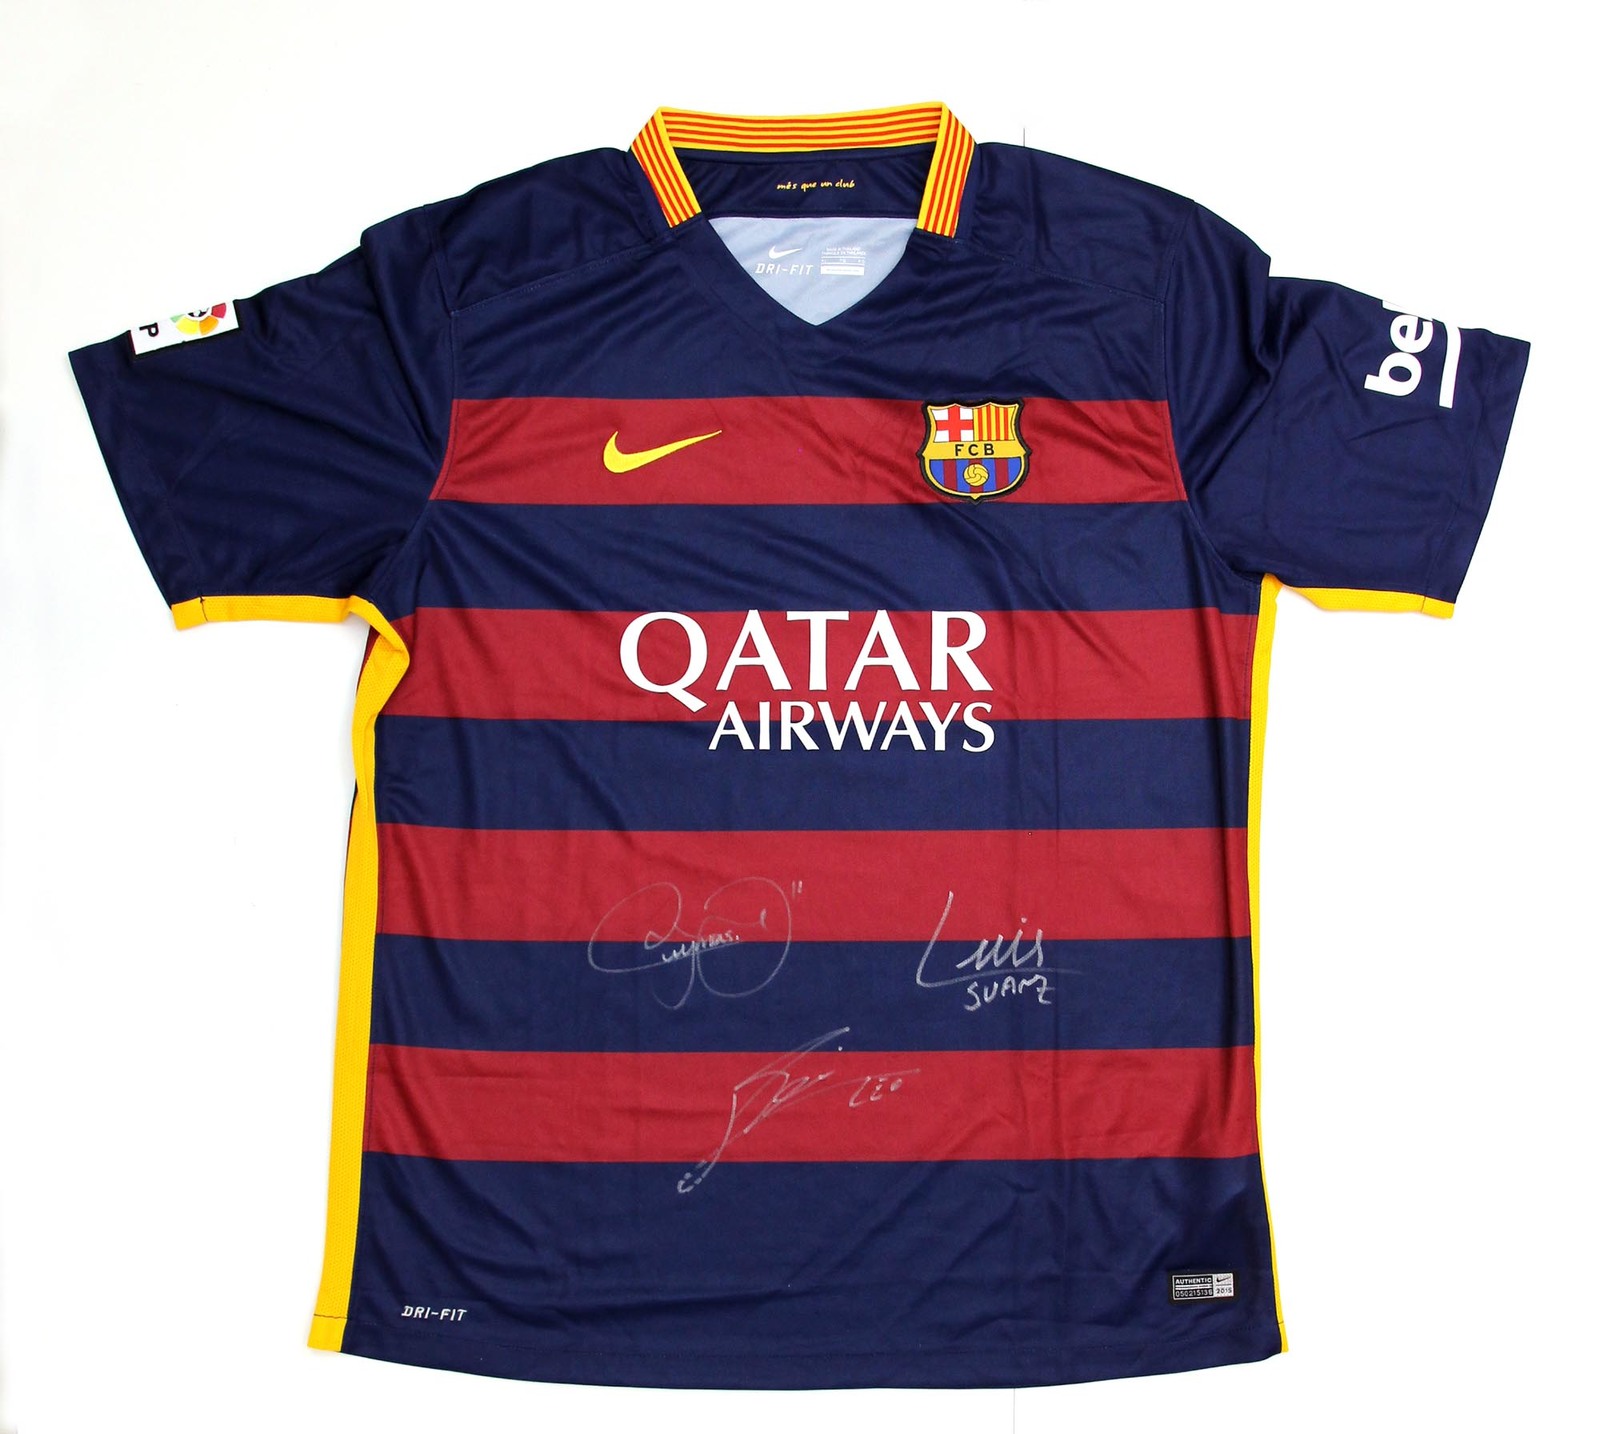 neymar jr barcelona jersey